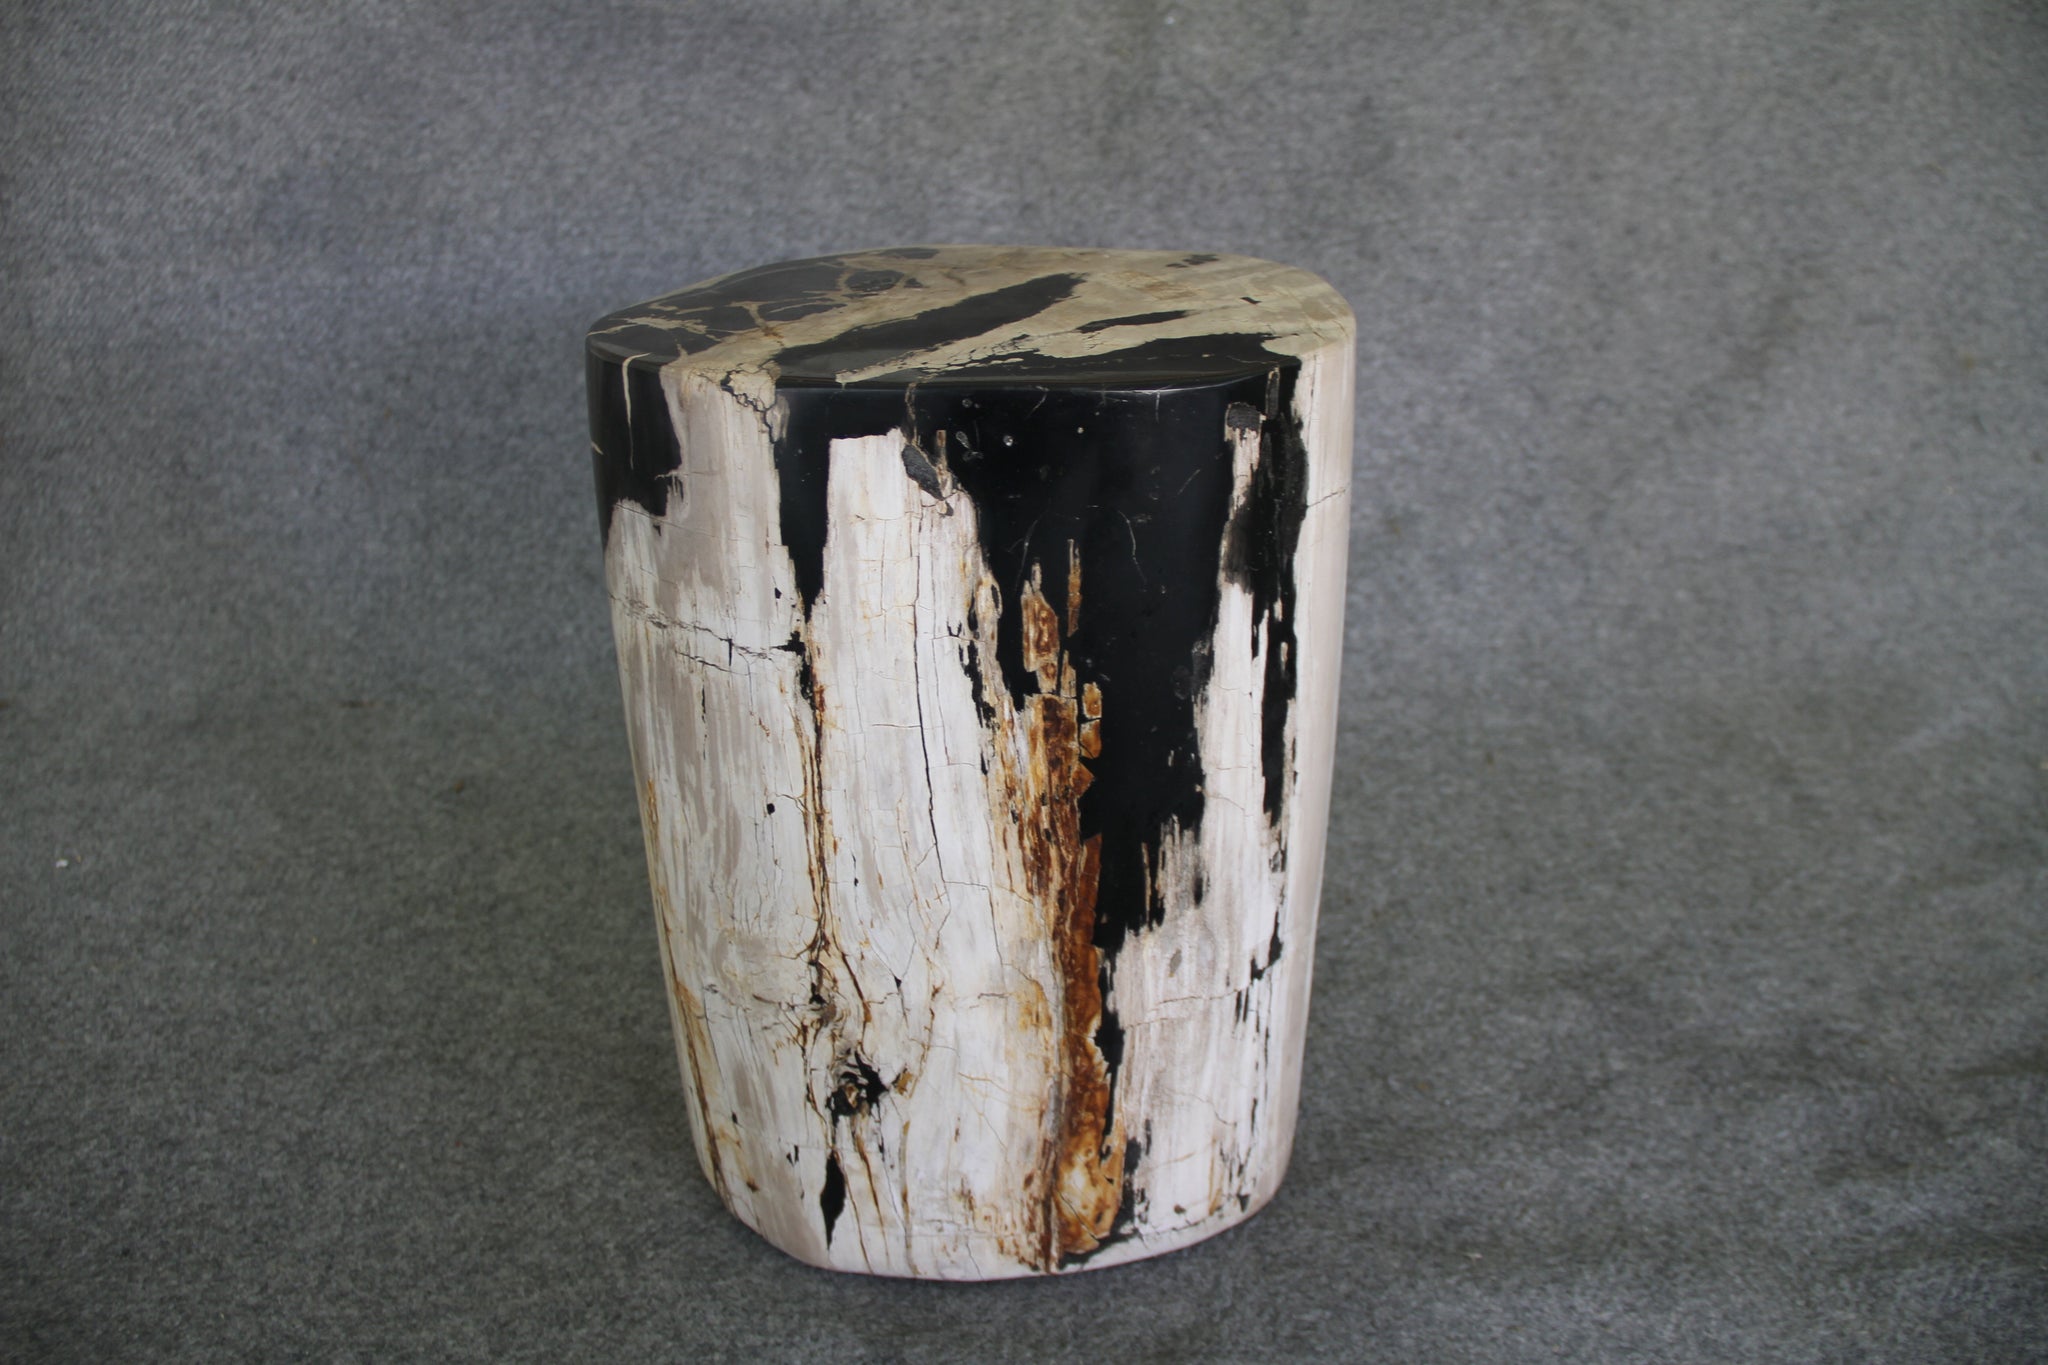 Petrified Wood Log Stool 12 x 9 x 17 - 1402.21